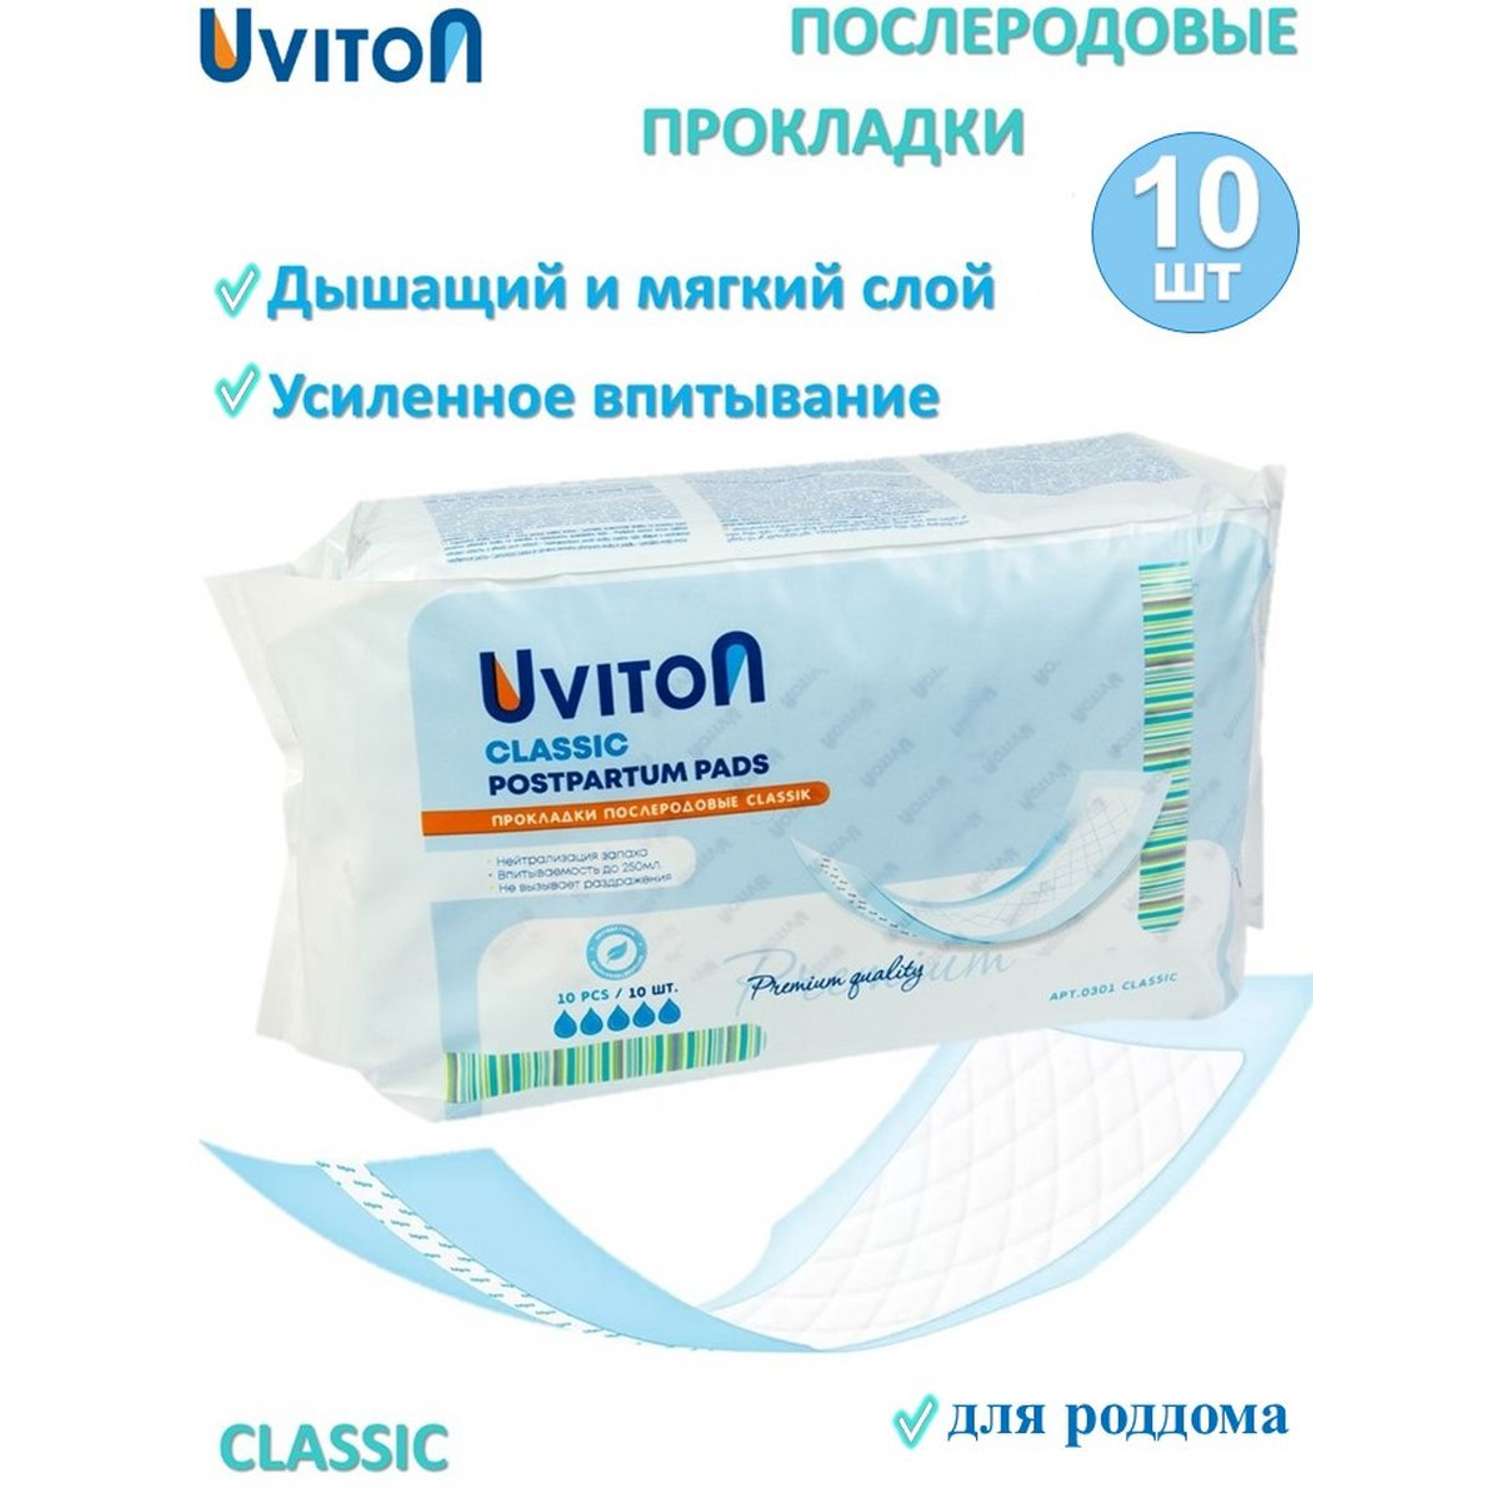 Прокладки Uviton послеродовые Classic арт.0301 - фото 1